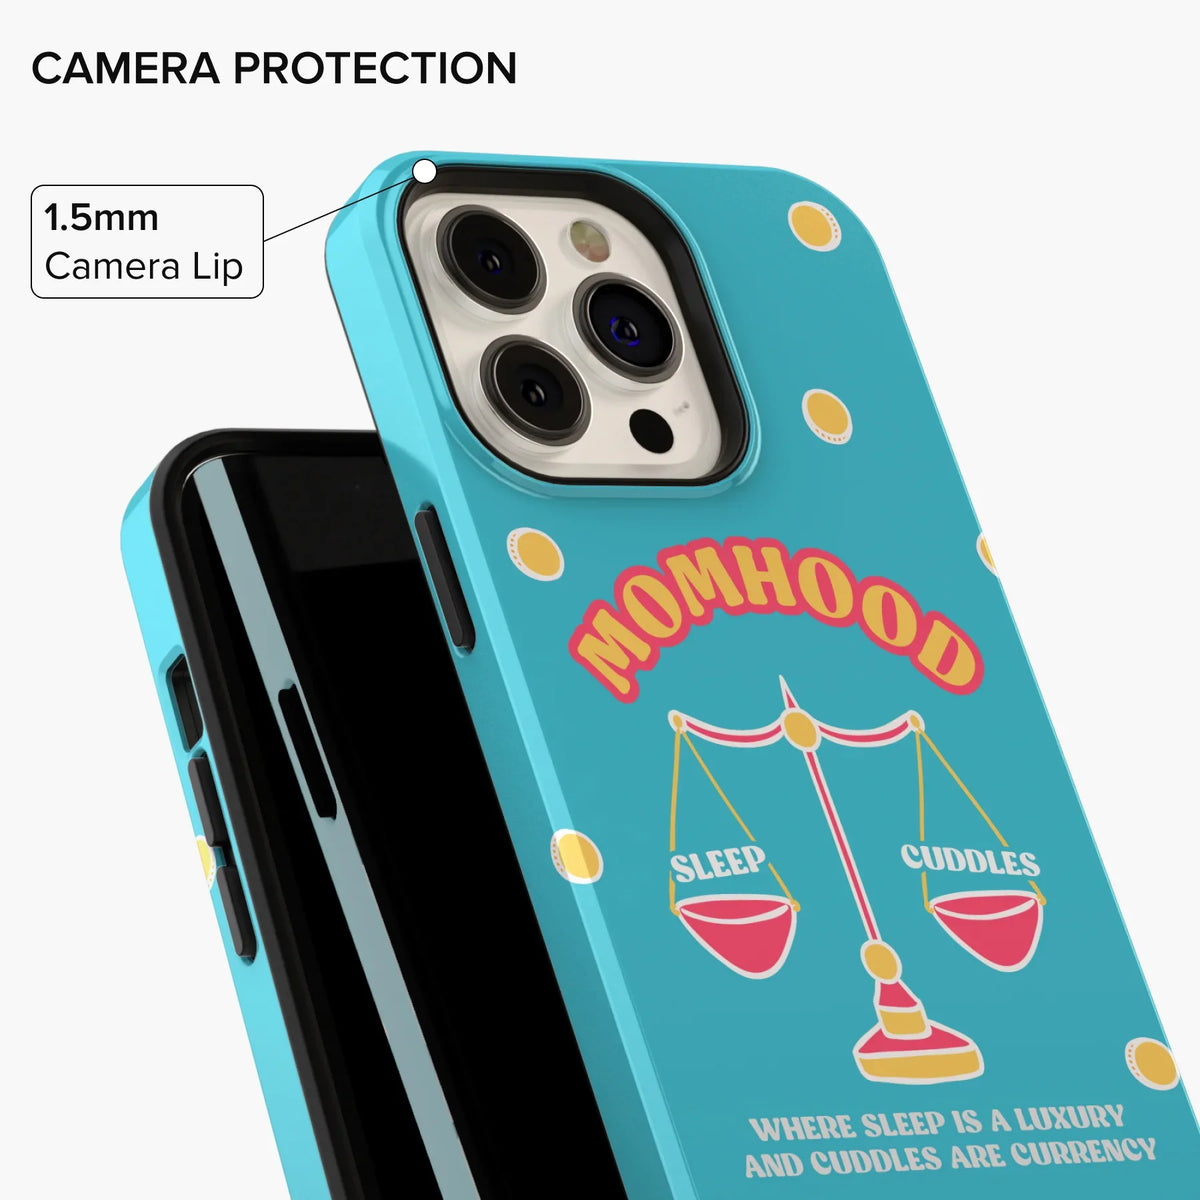 Momhood iPhone Case - iPhone 13 Pro